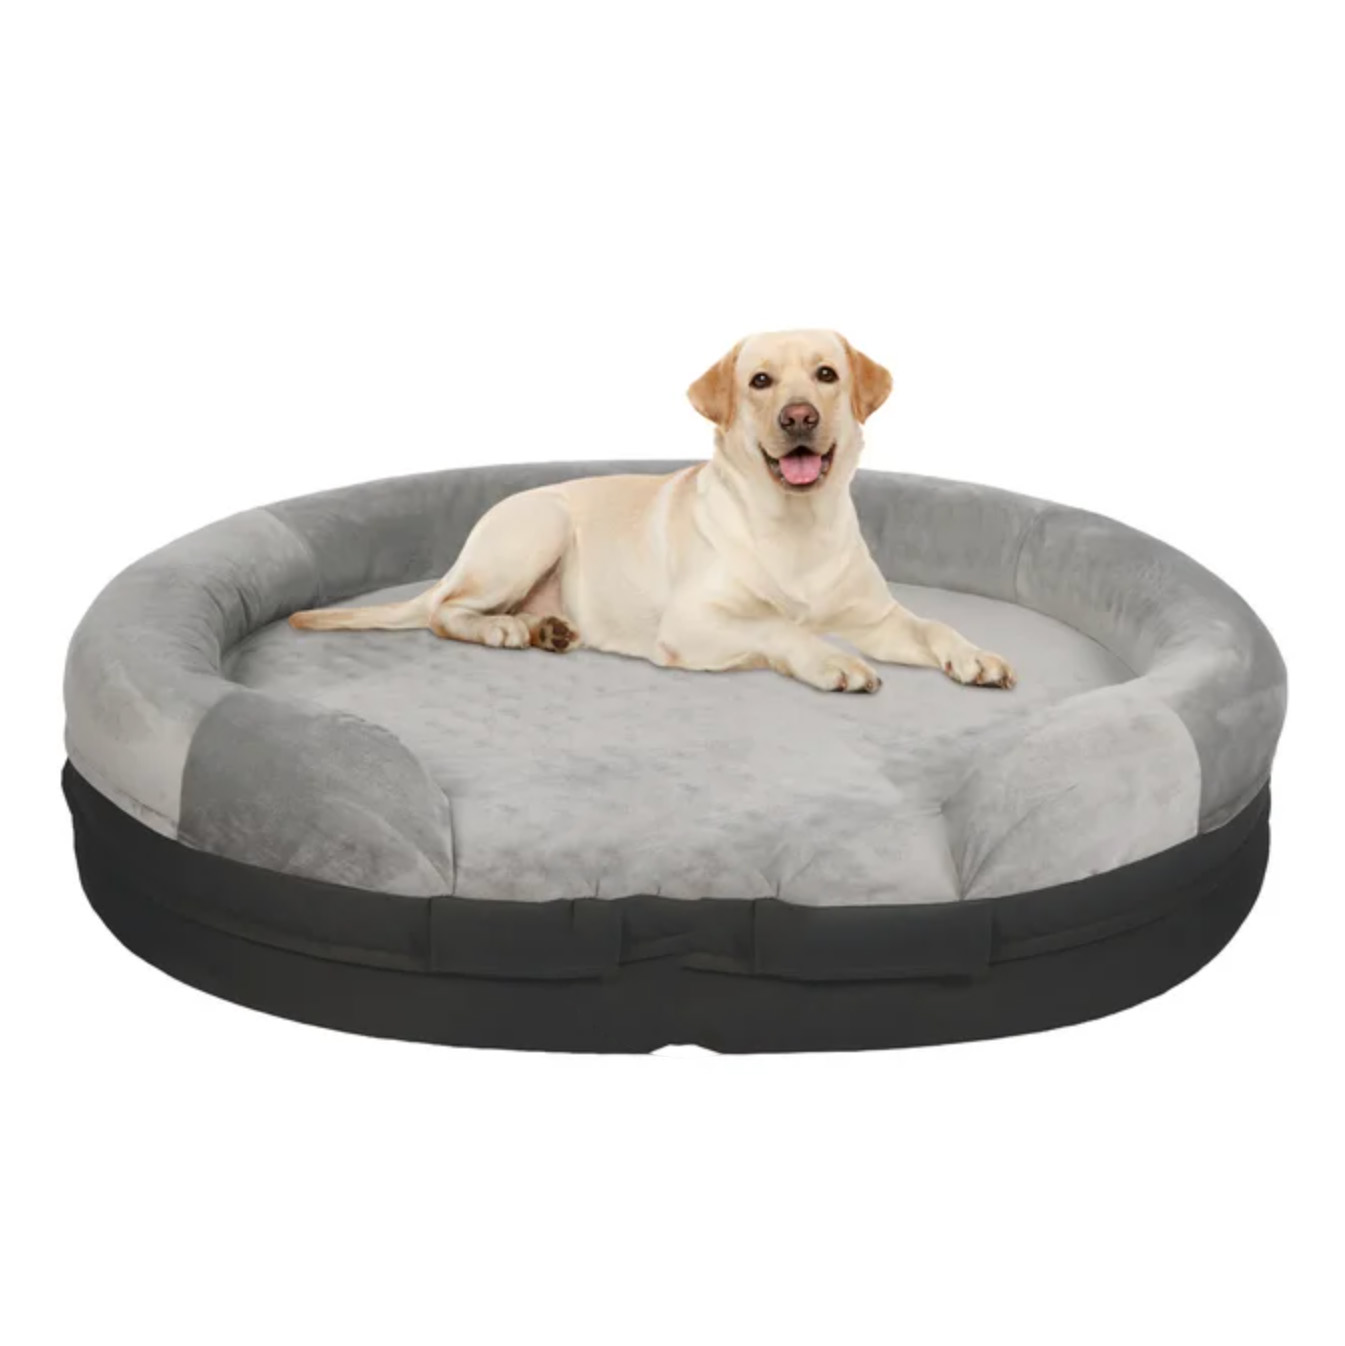 Dog sitting on grey round dog bed